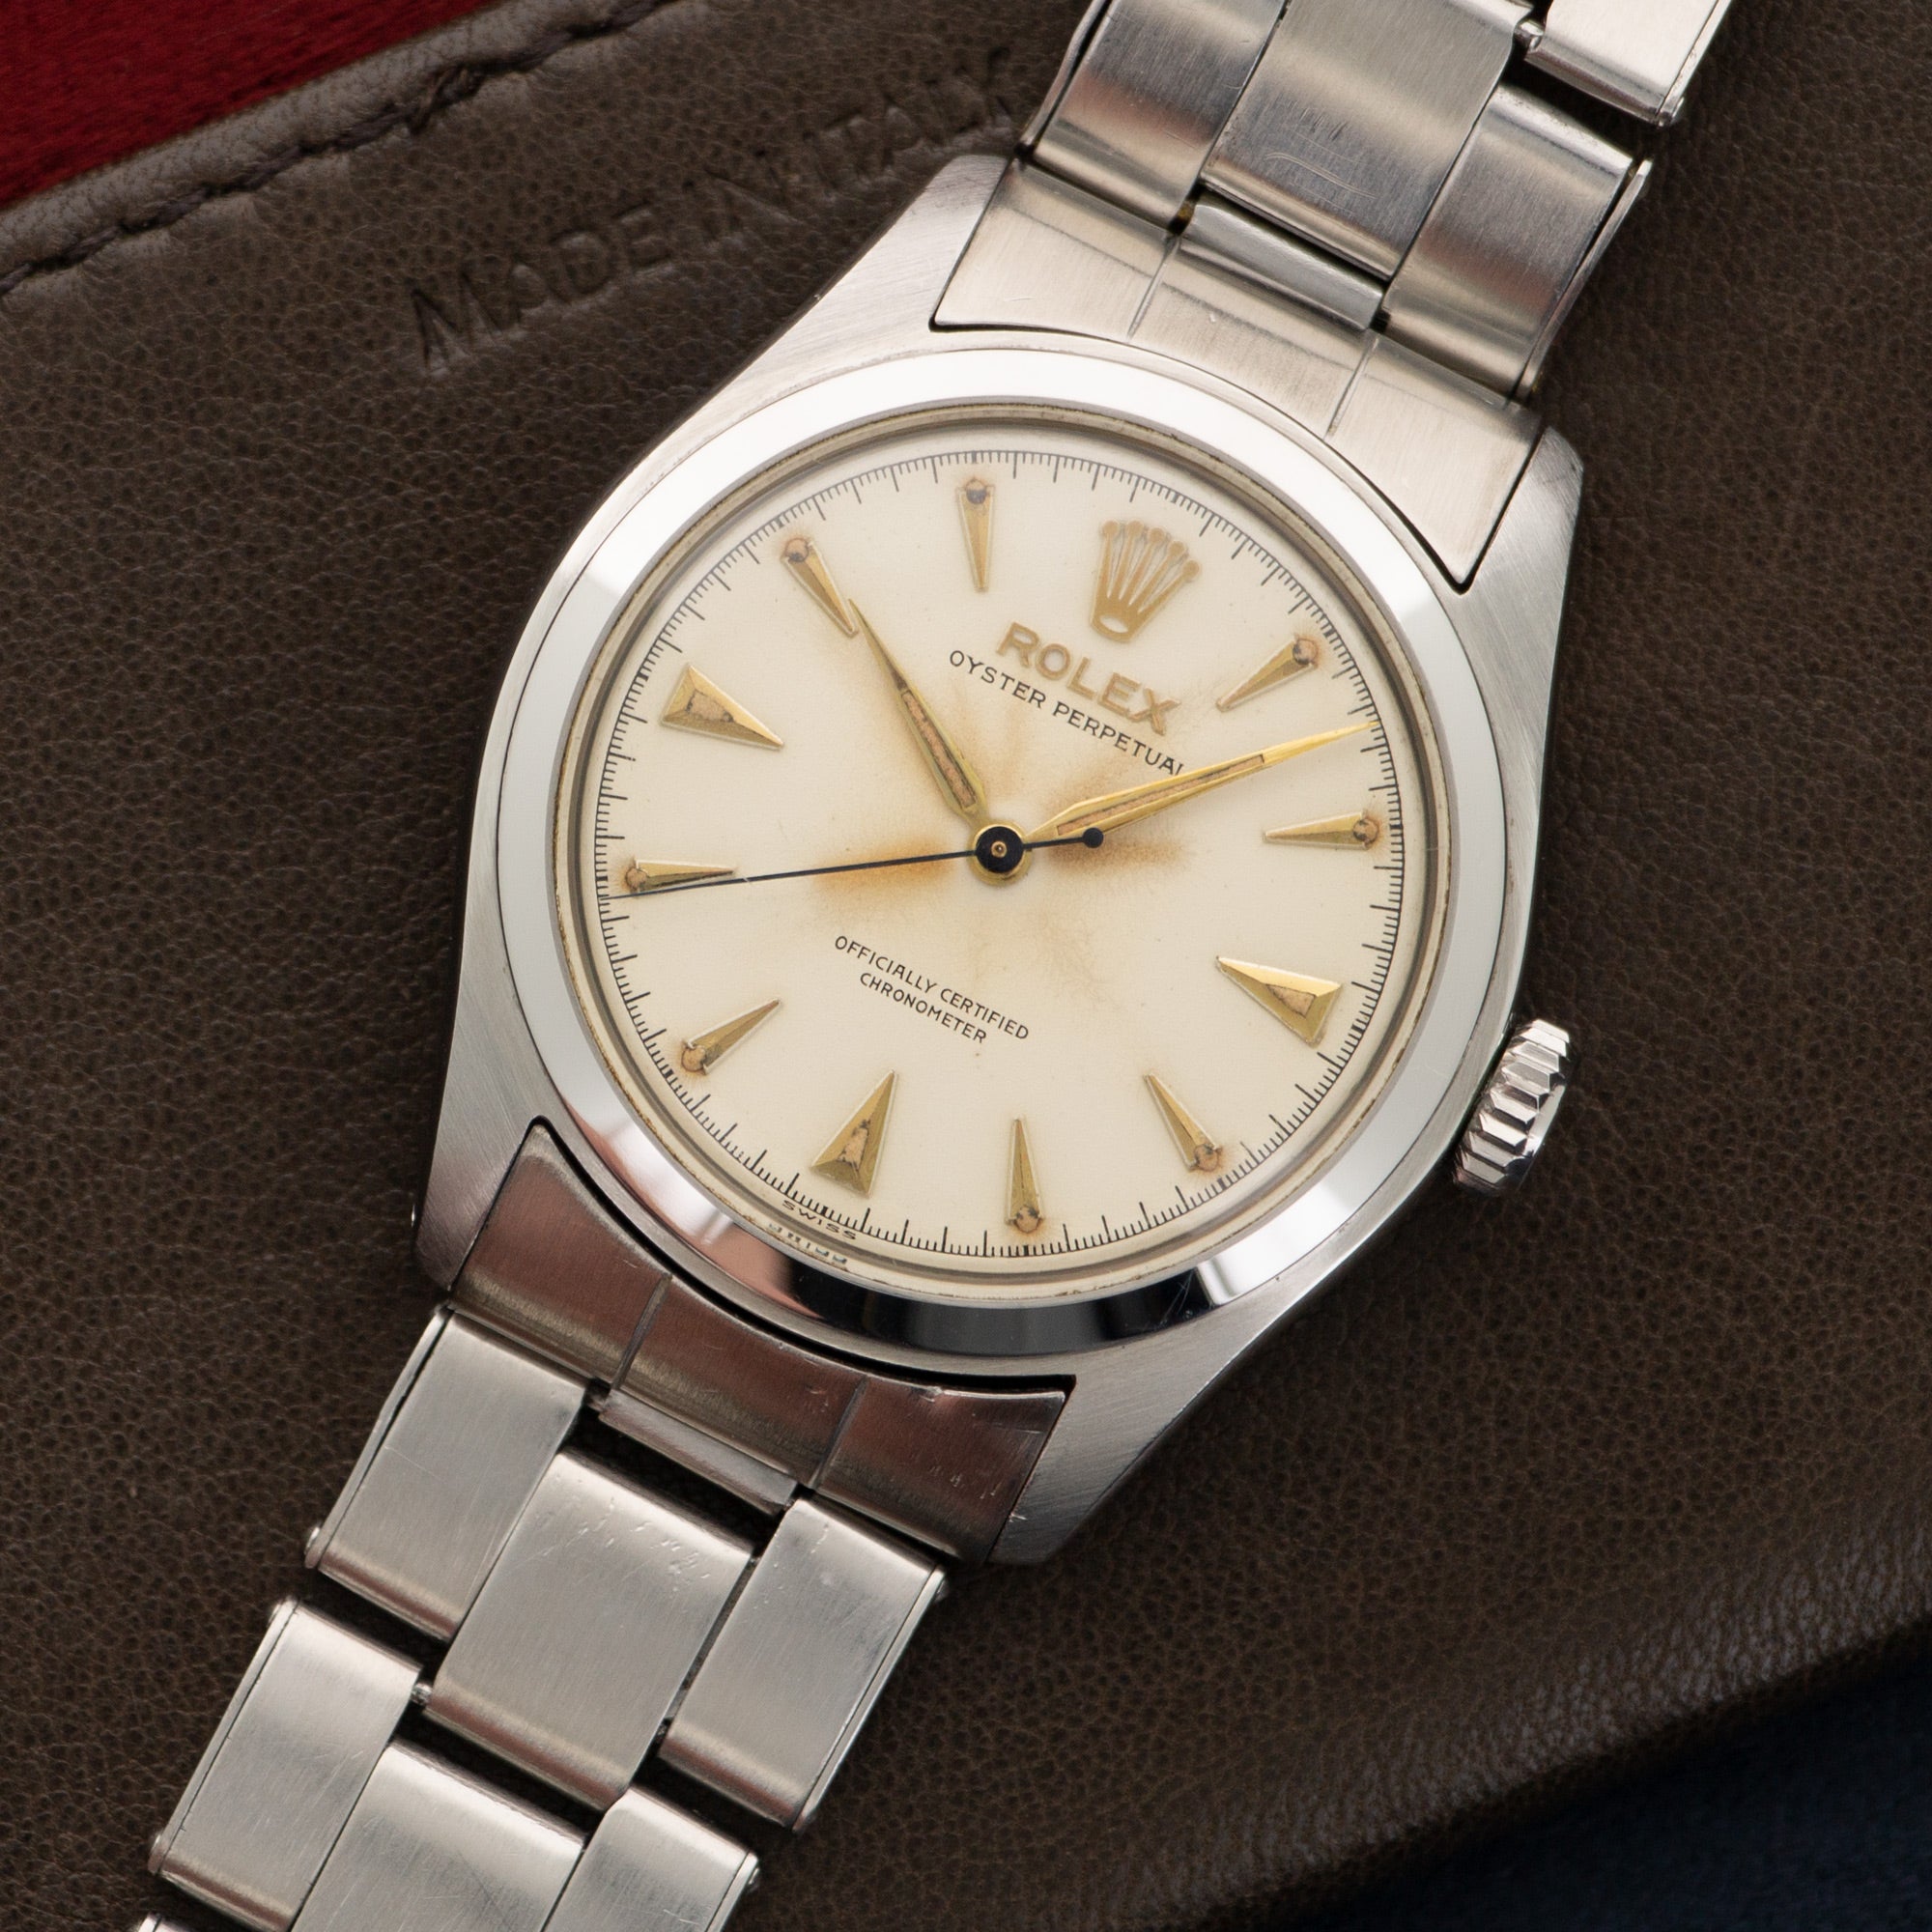 Rolex - Rolex Oyster Perpetual Watch Ref. 6106, Circa 1958 - The Keystone Watches